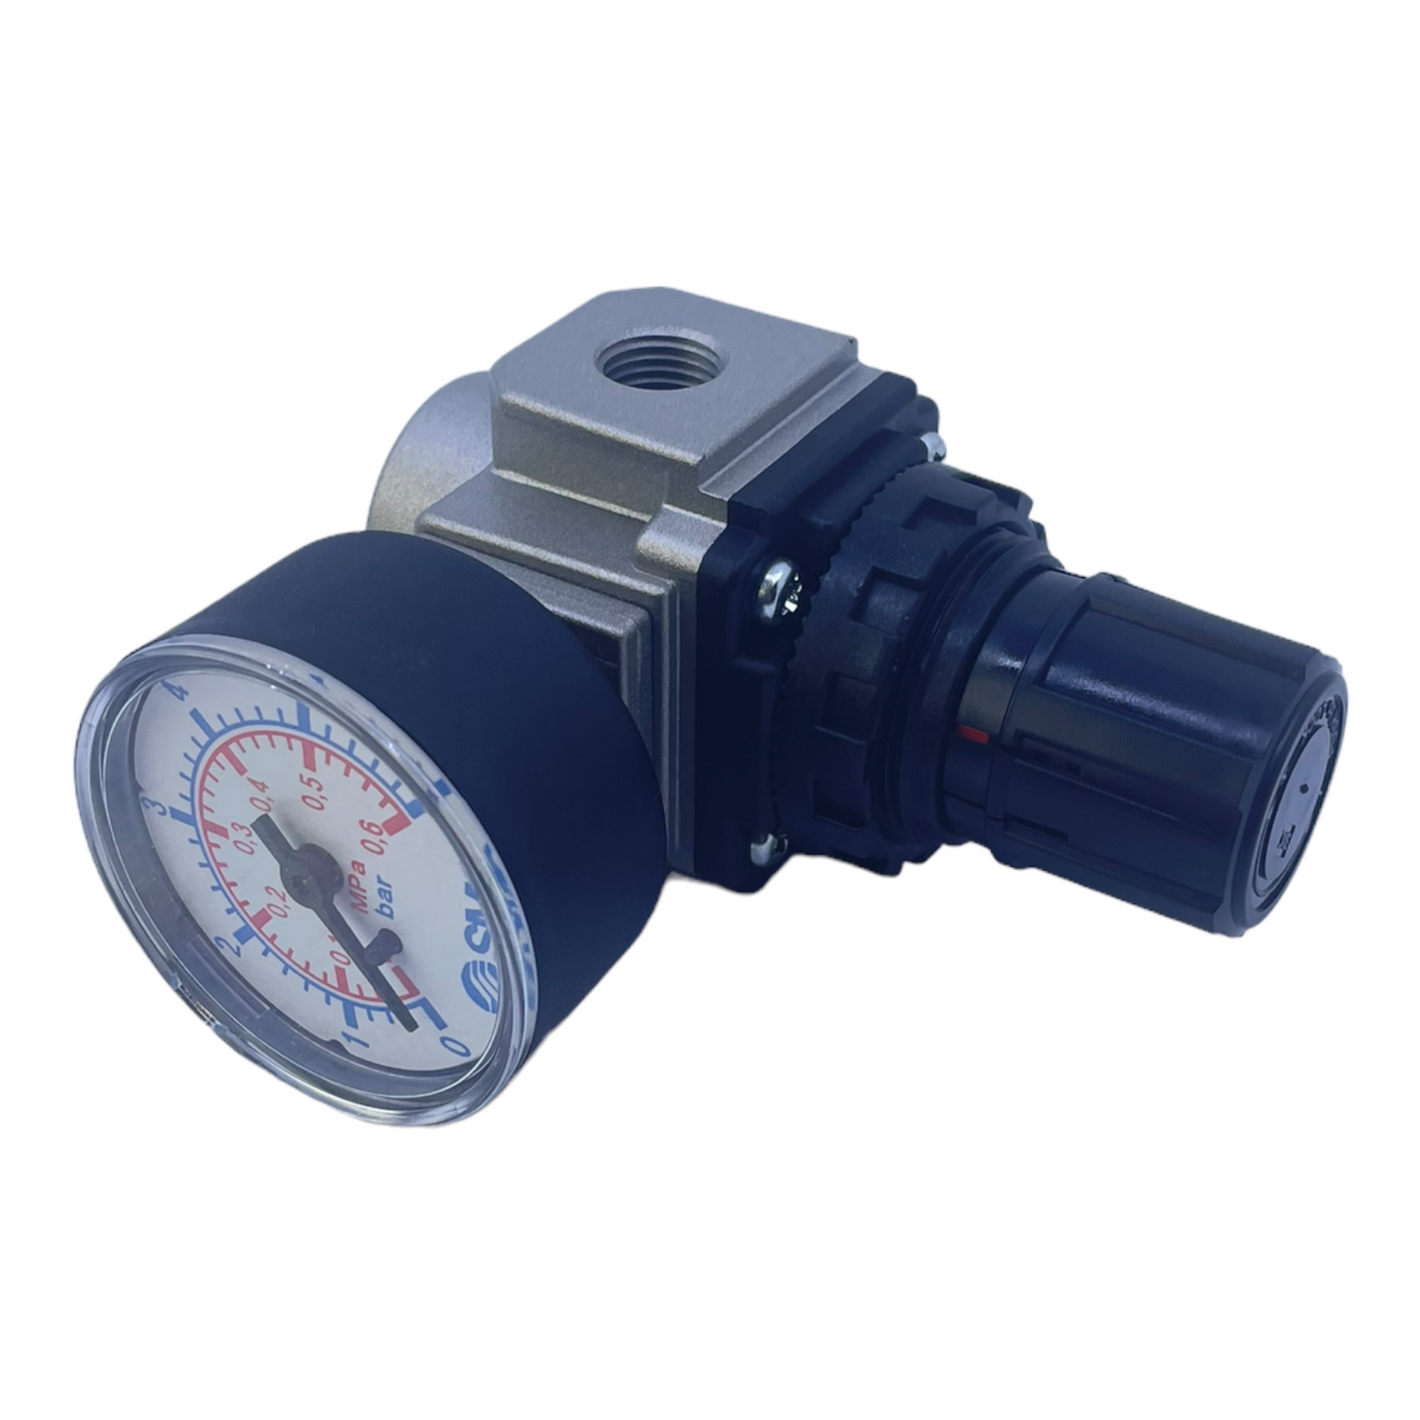 SMC AR25-F02H pressure control valve for industrial use SMC AR25-F02H valve 